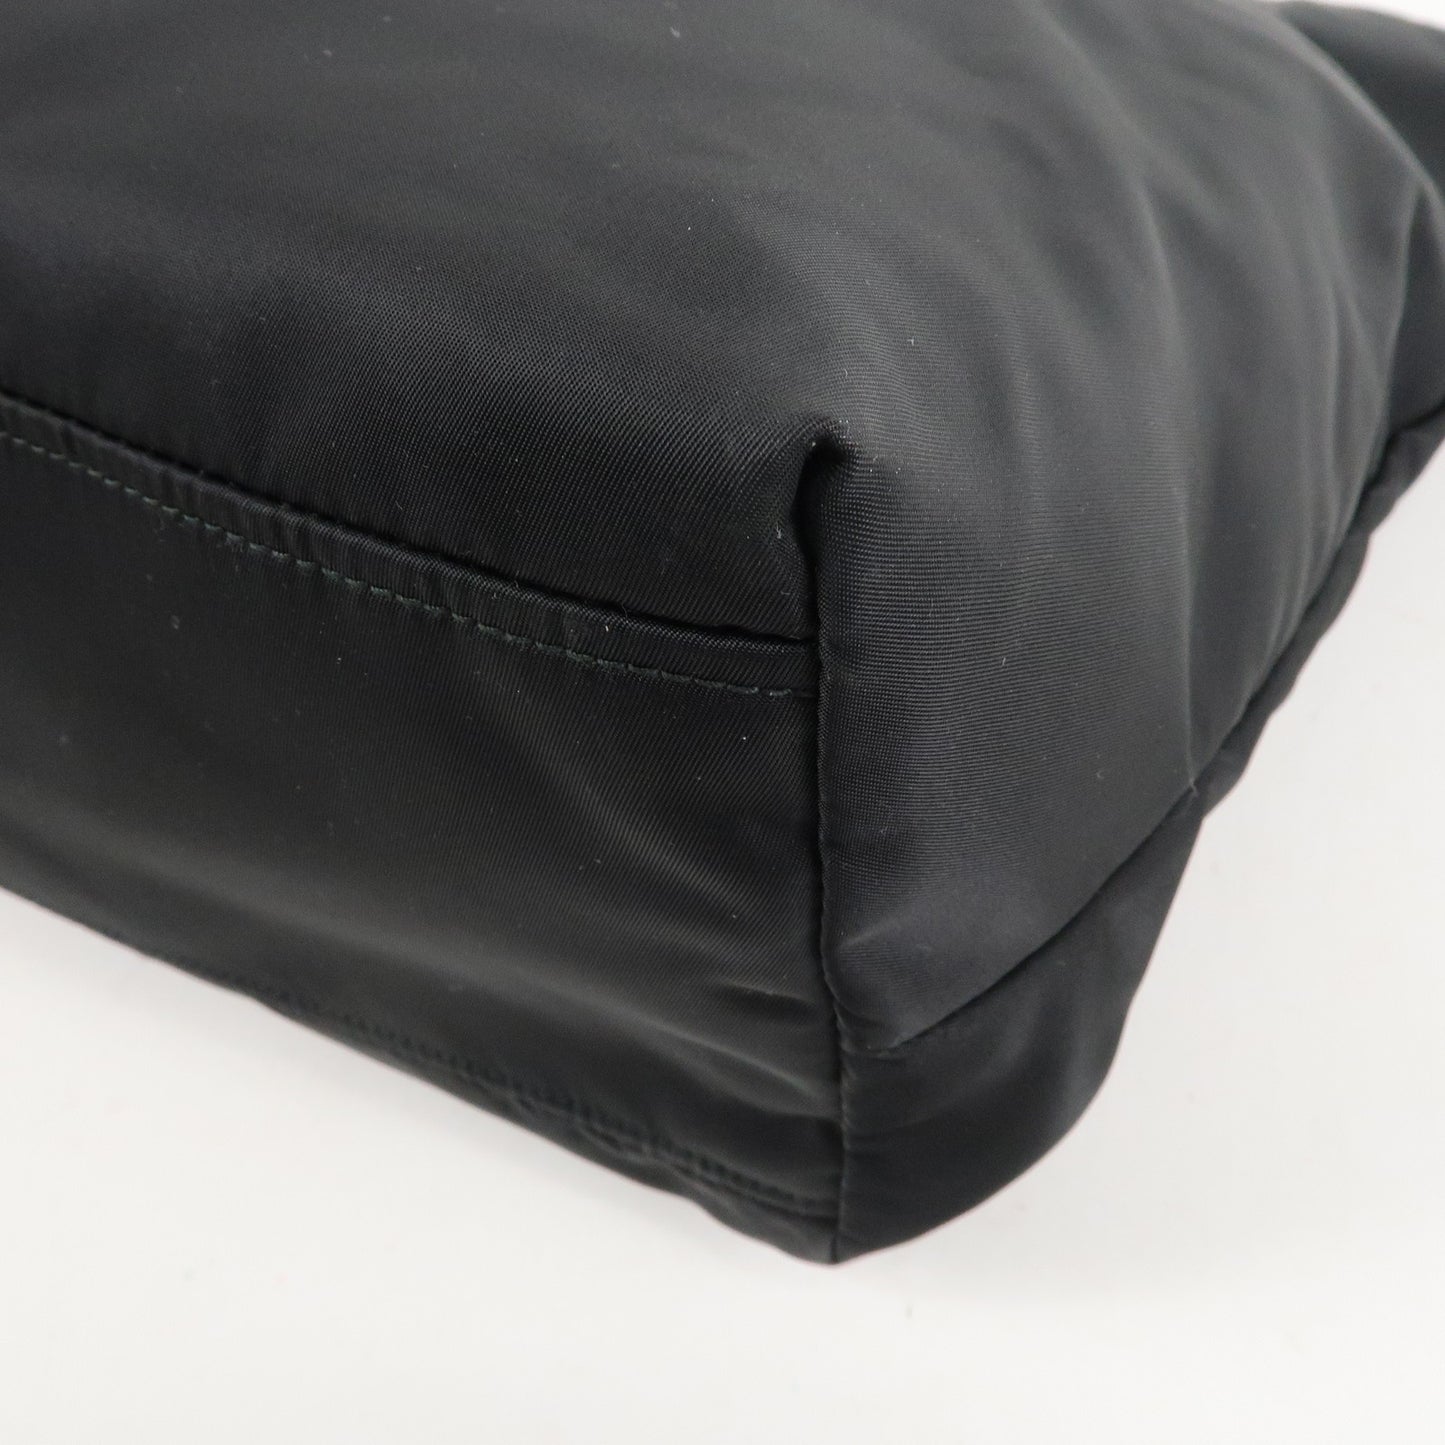 PRADA Logo Nylon Leather Tote Bag NERO Black 1BG052